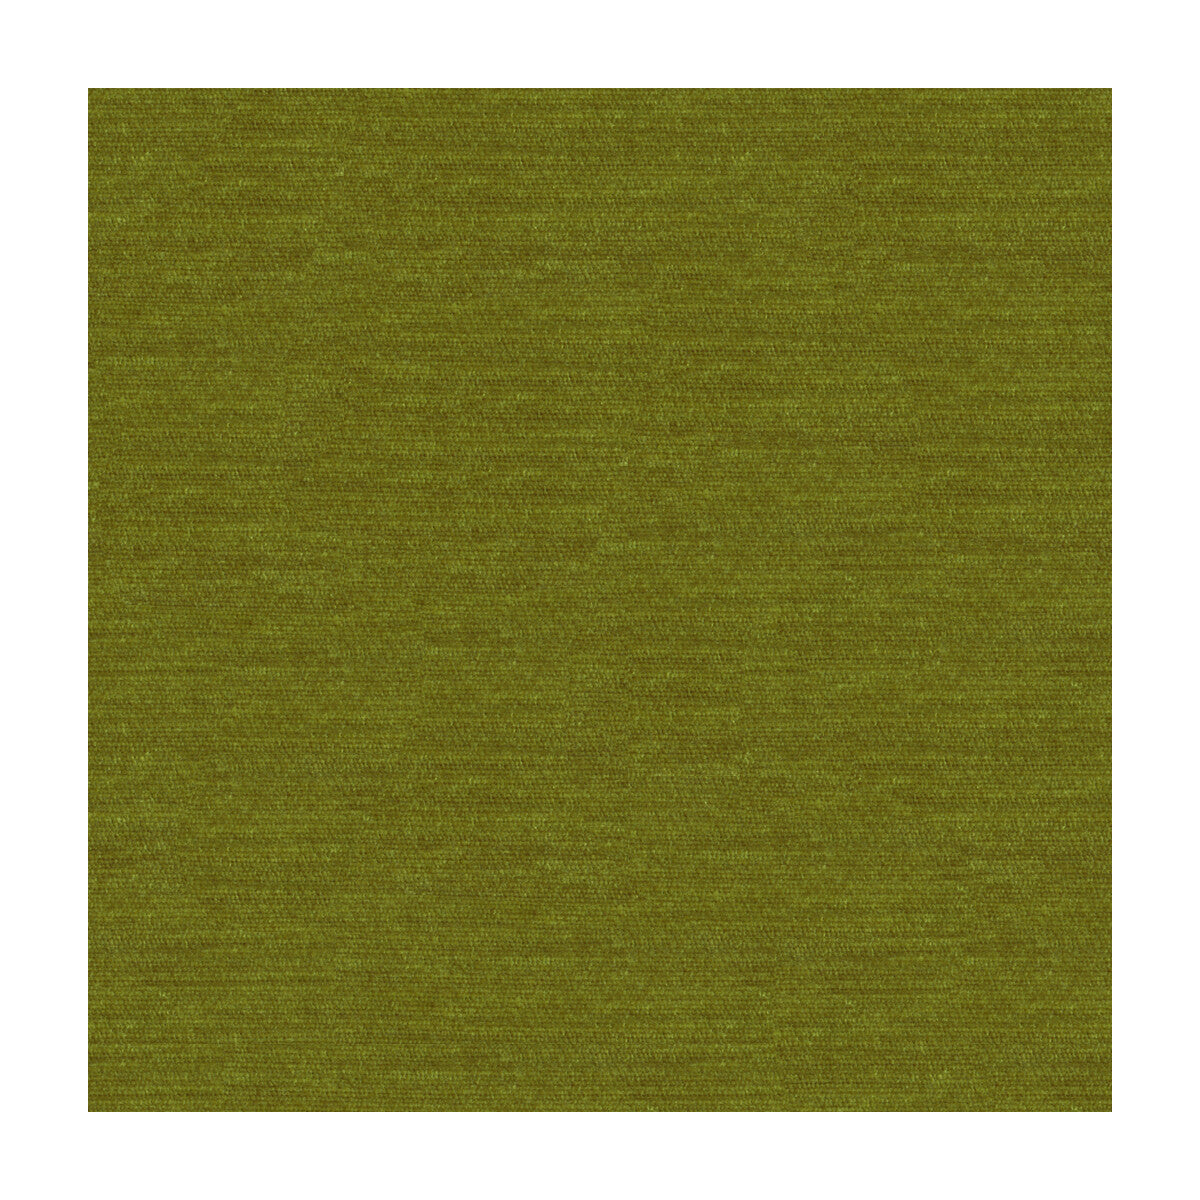 Kravet Smart fabric in 32962-23 color - pattern 32962.23.0 - by Kravet Smart